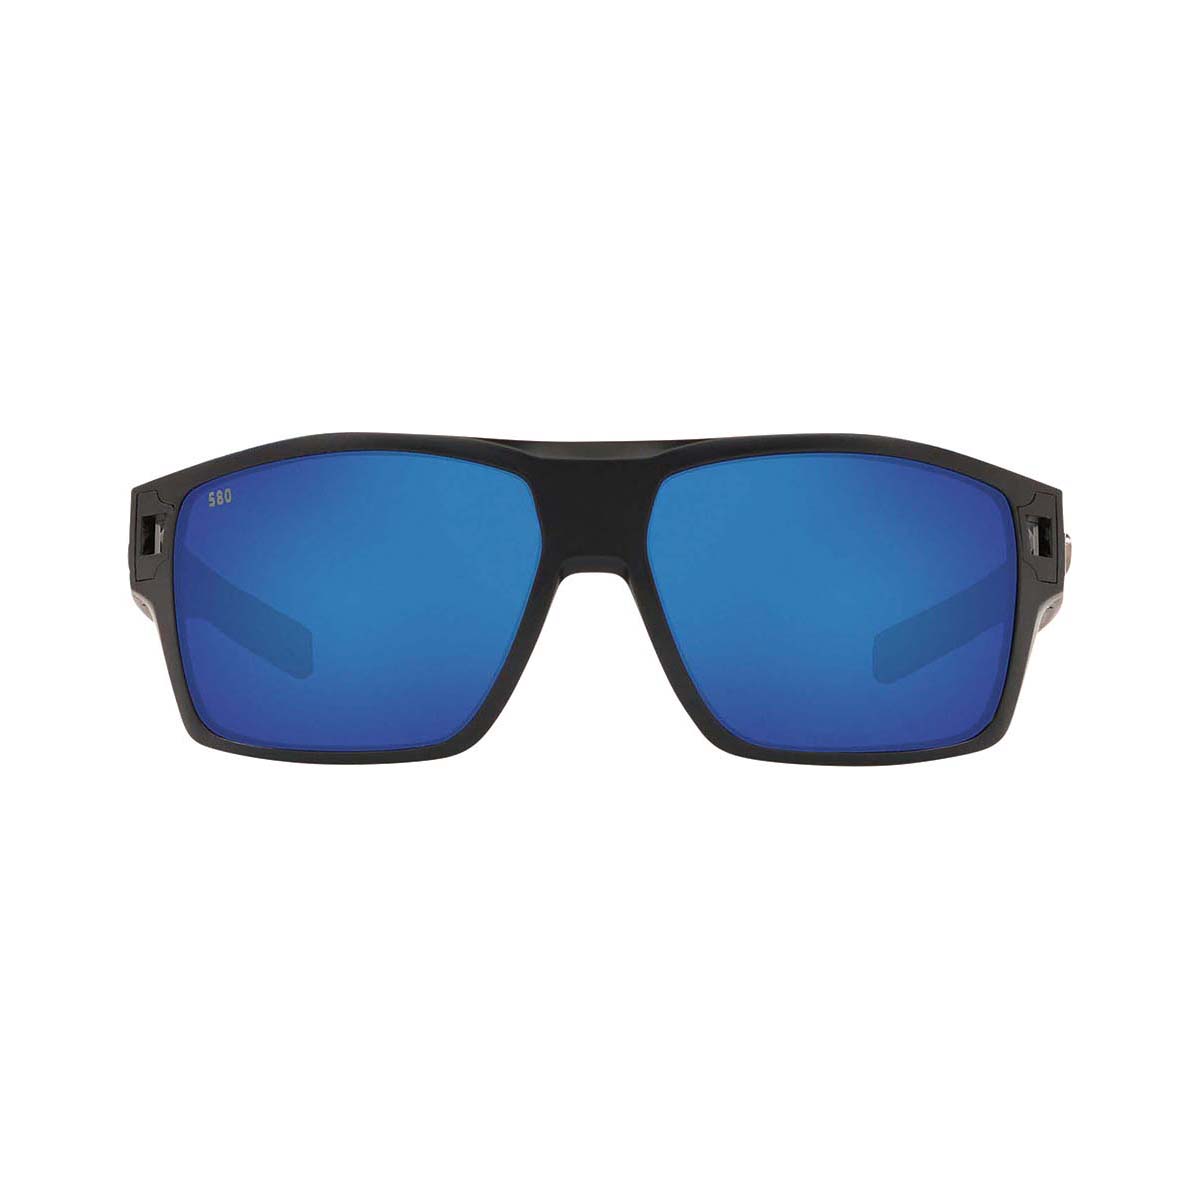 Costa Diego Men's Sunglasses Black with Blue Lens